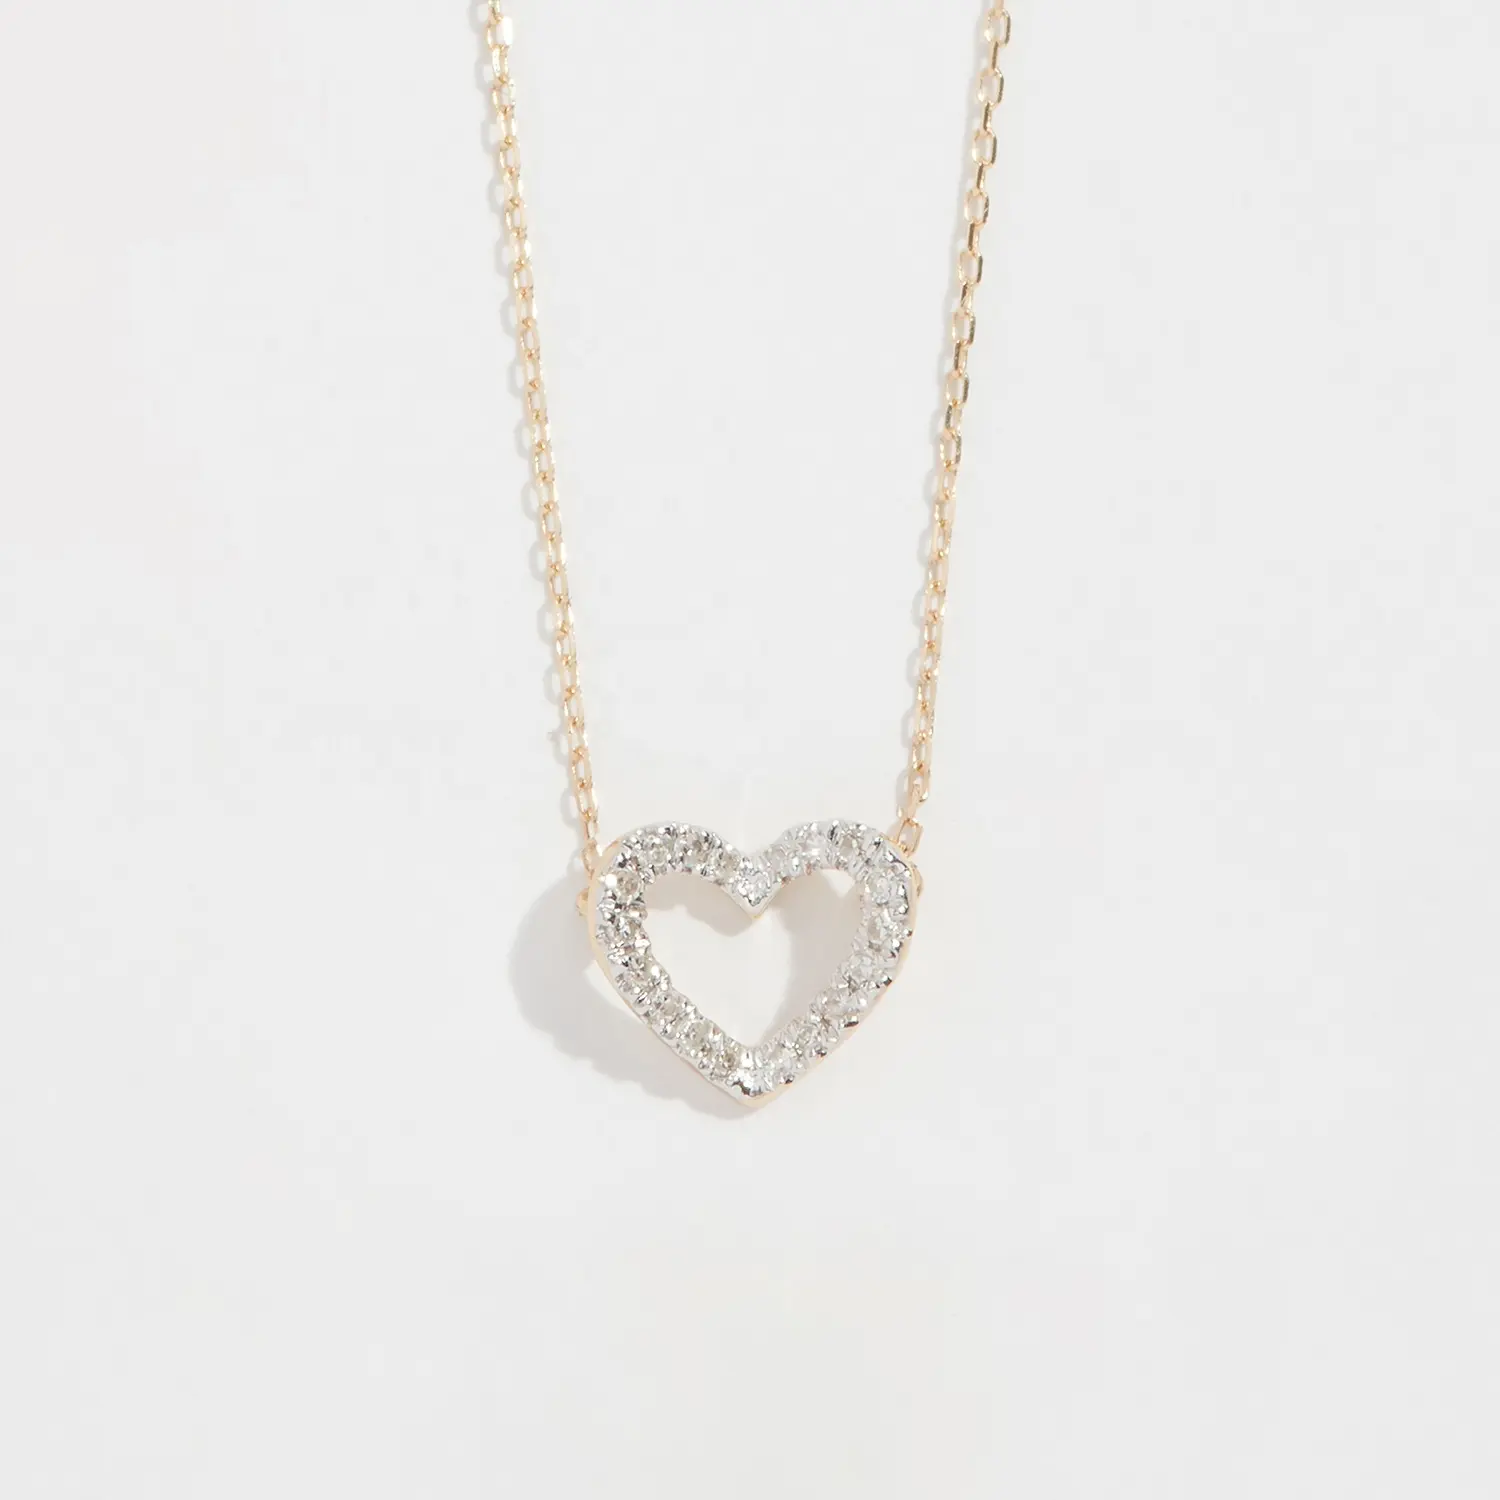 LOZRUNVE 925 Silver Pave Diamond CZ Open Heart Necklace Jewelry